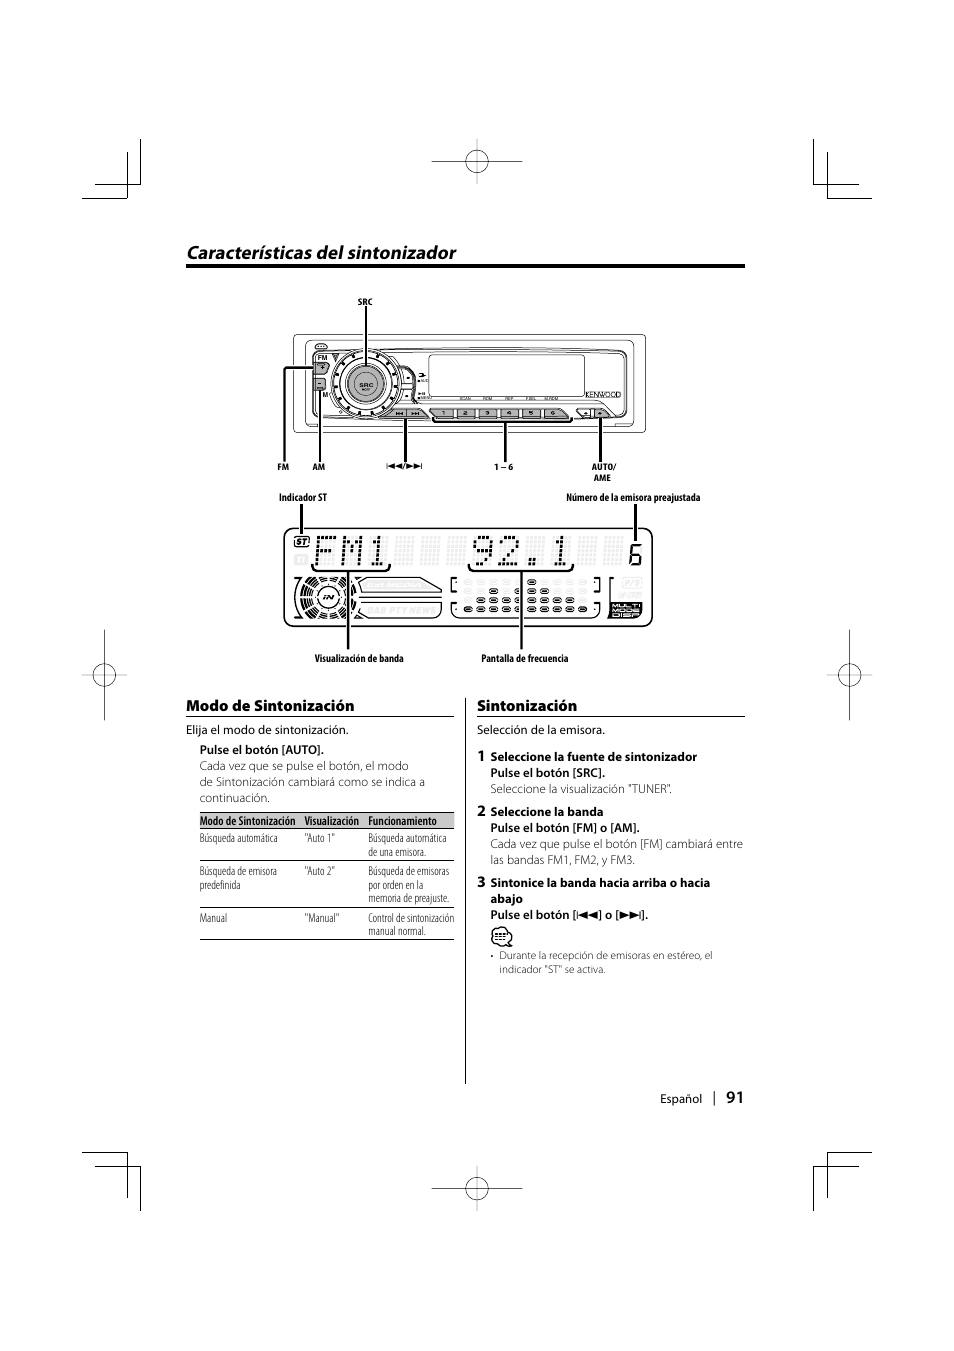 Caracteristicas del sintonizador, Características del sintonizador, Modo de  sintonización | Kenwood KDC-MPV5025 User Manual | Page 91 / 116 | Original  mode